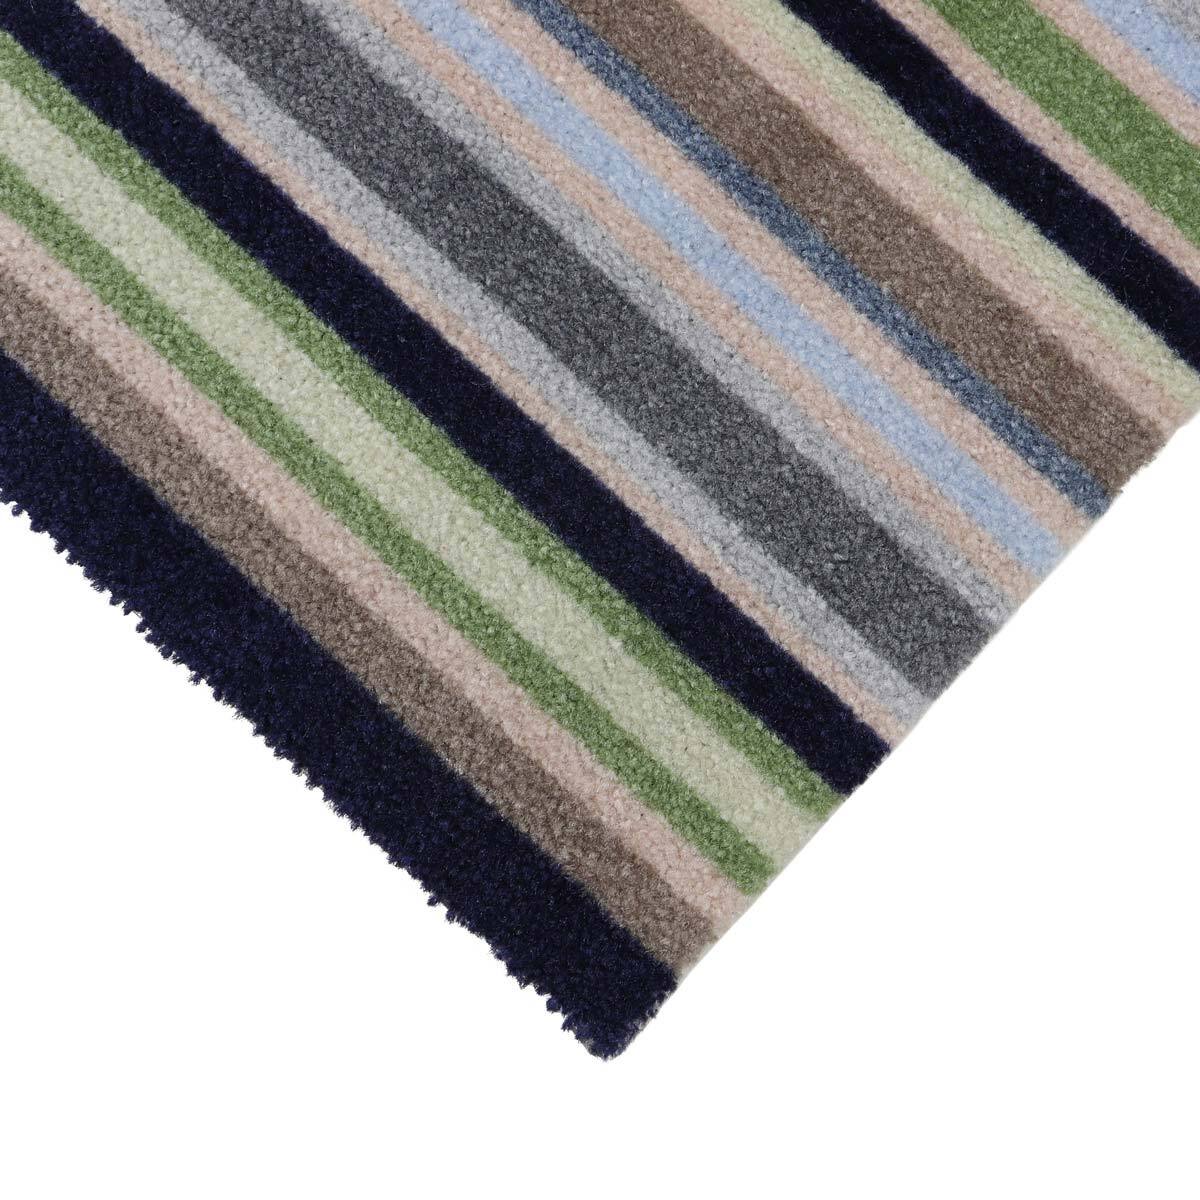 Close up image of corner of mat on white background